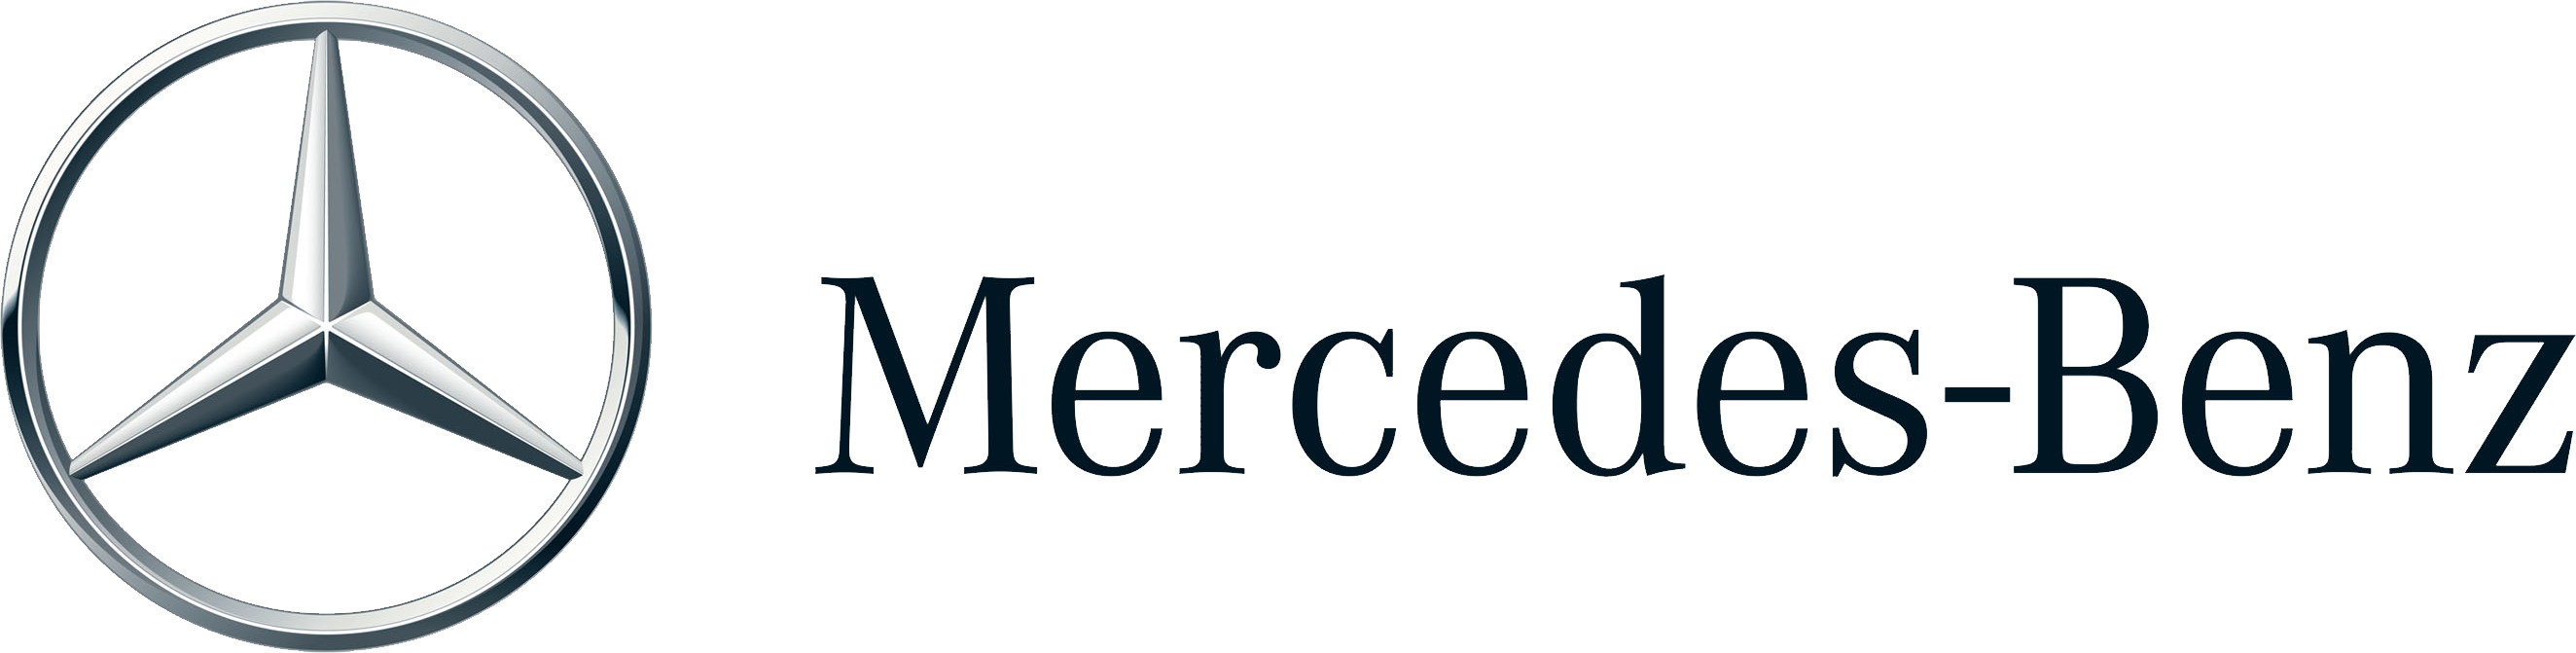 Mercedes-Benz Logo Transparant Image